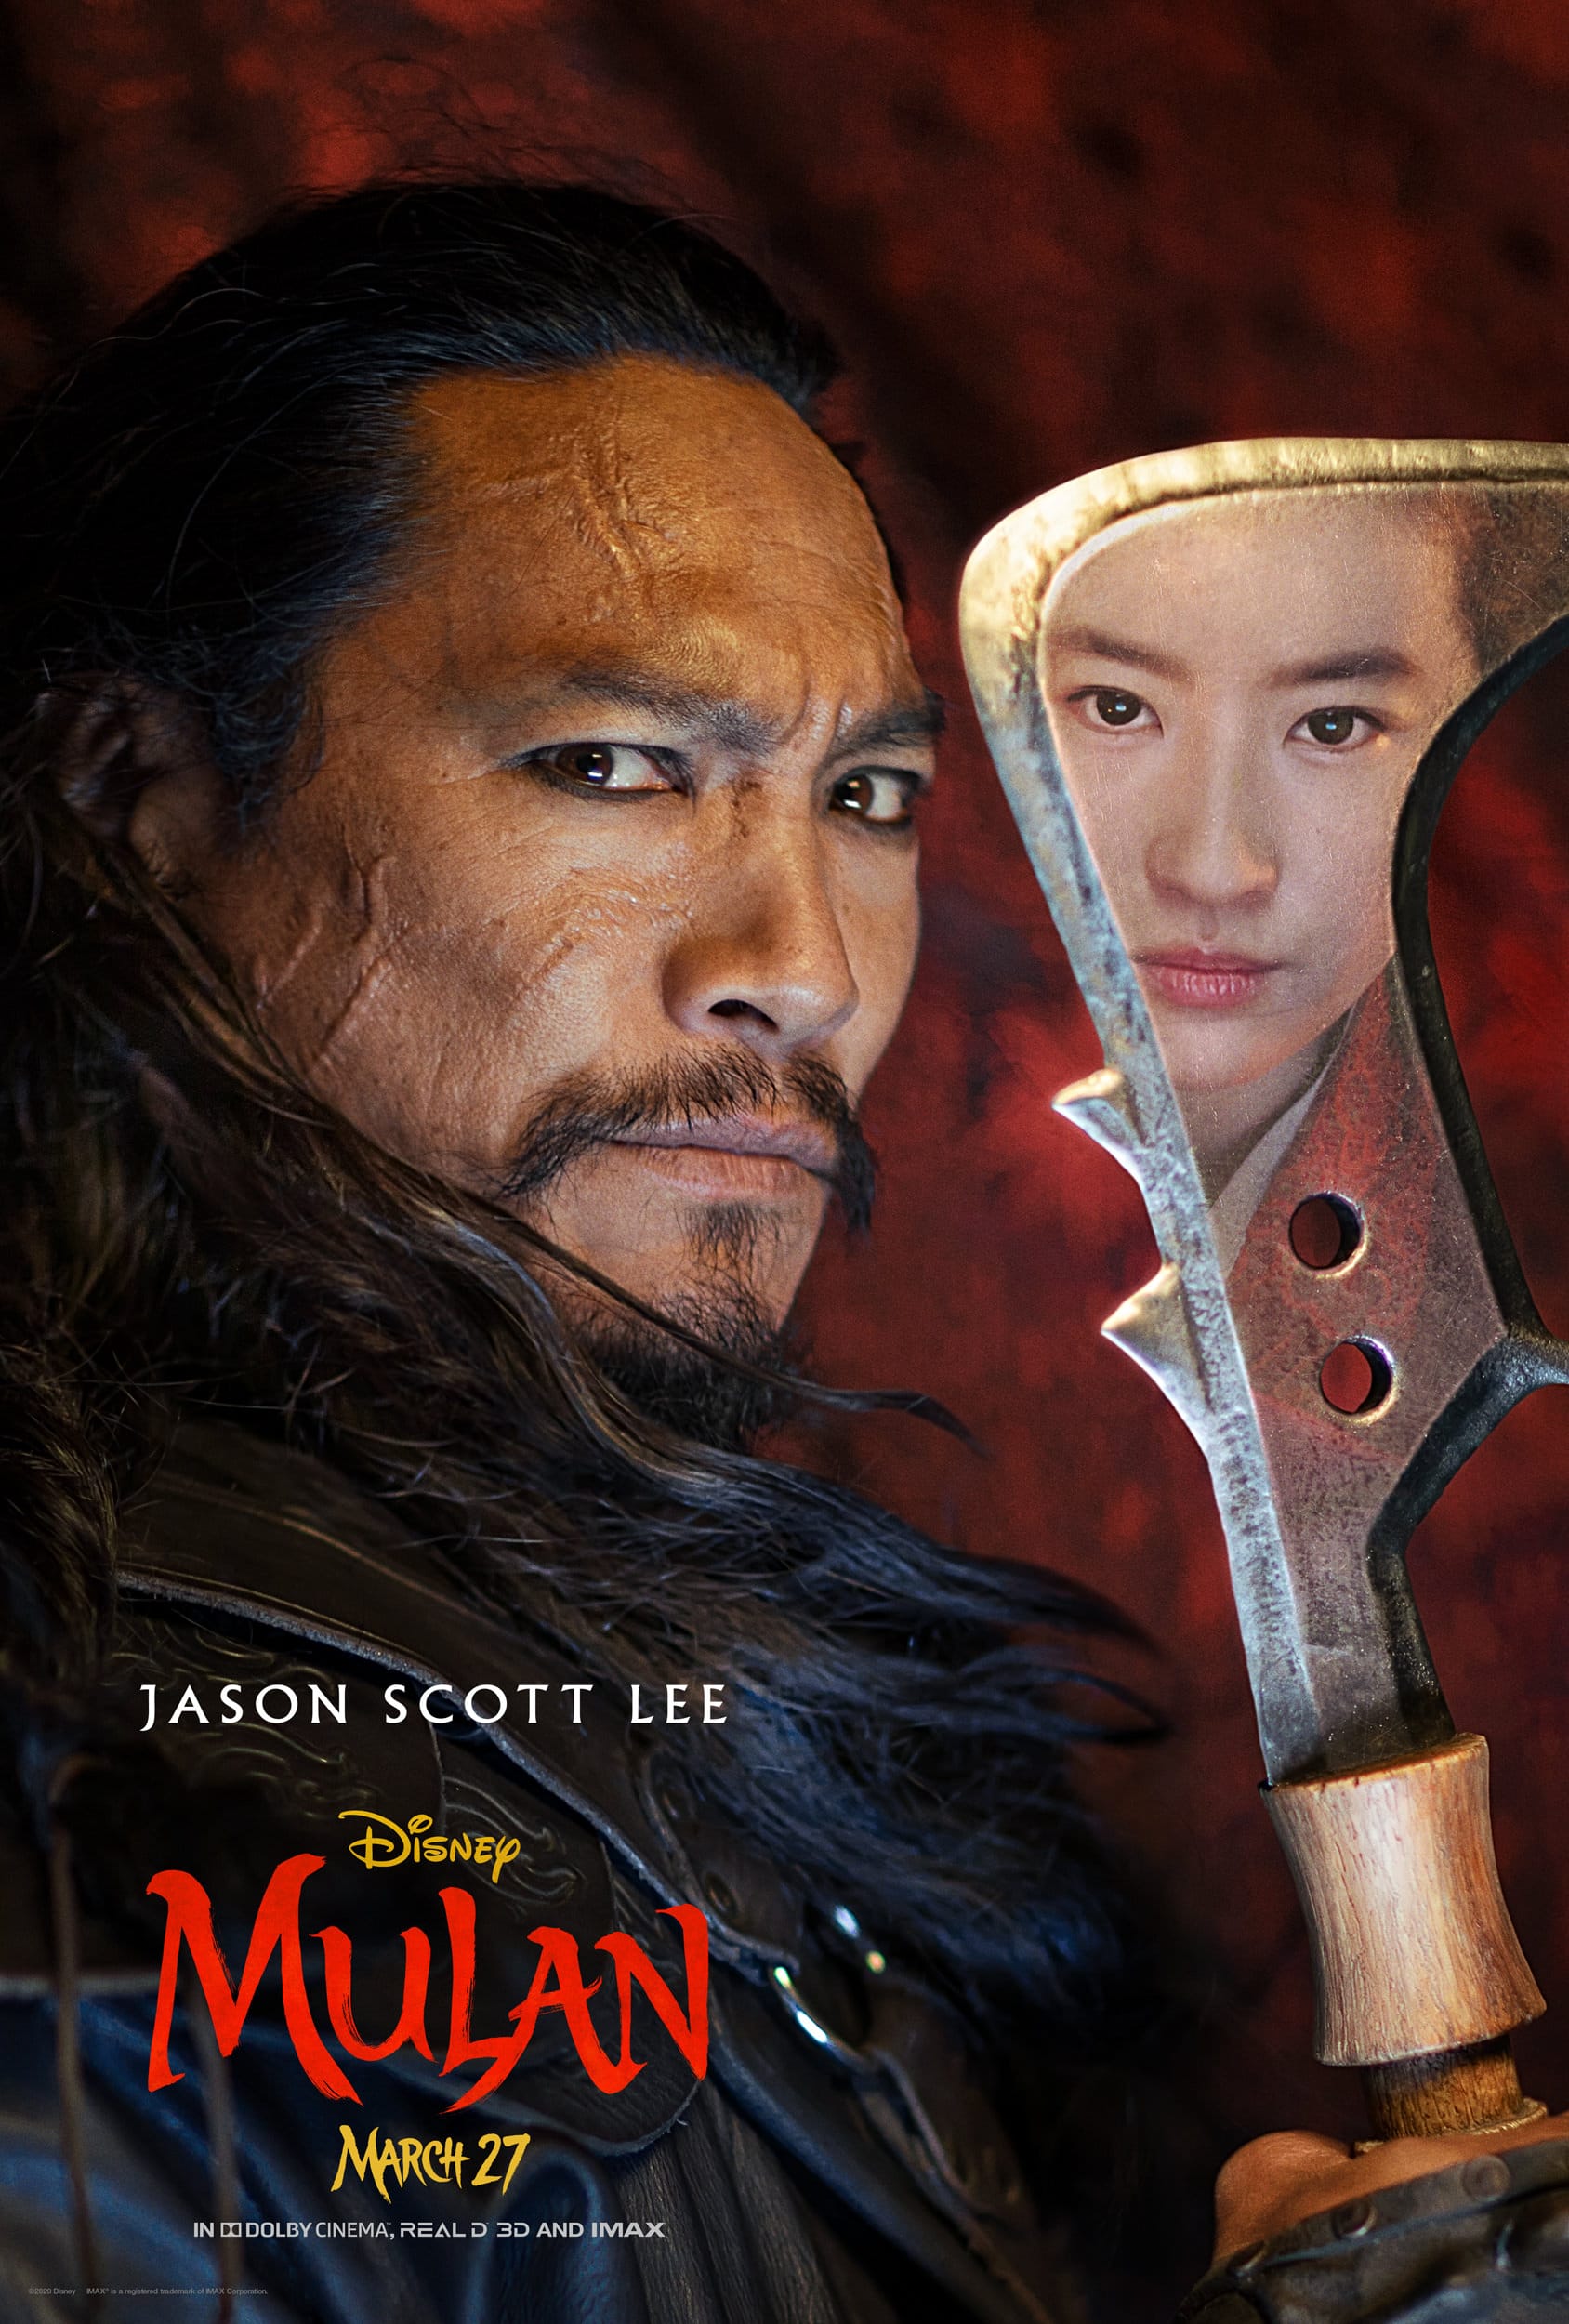 Jason Scott Lee as Böri Khan in Mulan - Poster provided by Disney